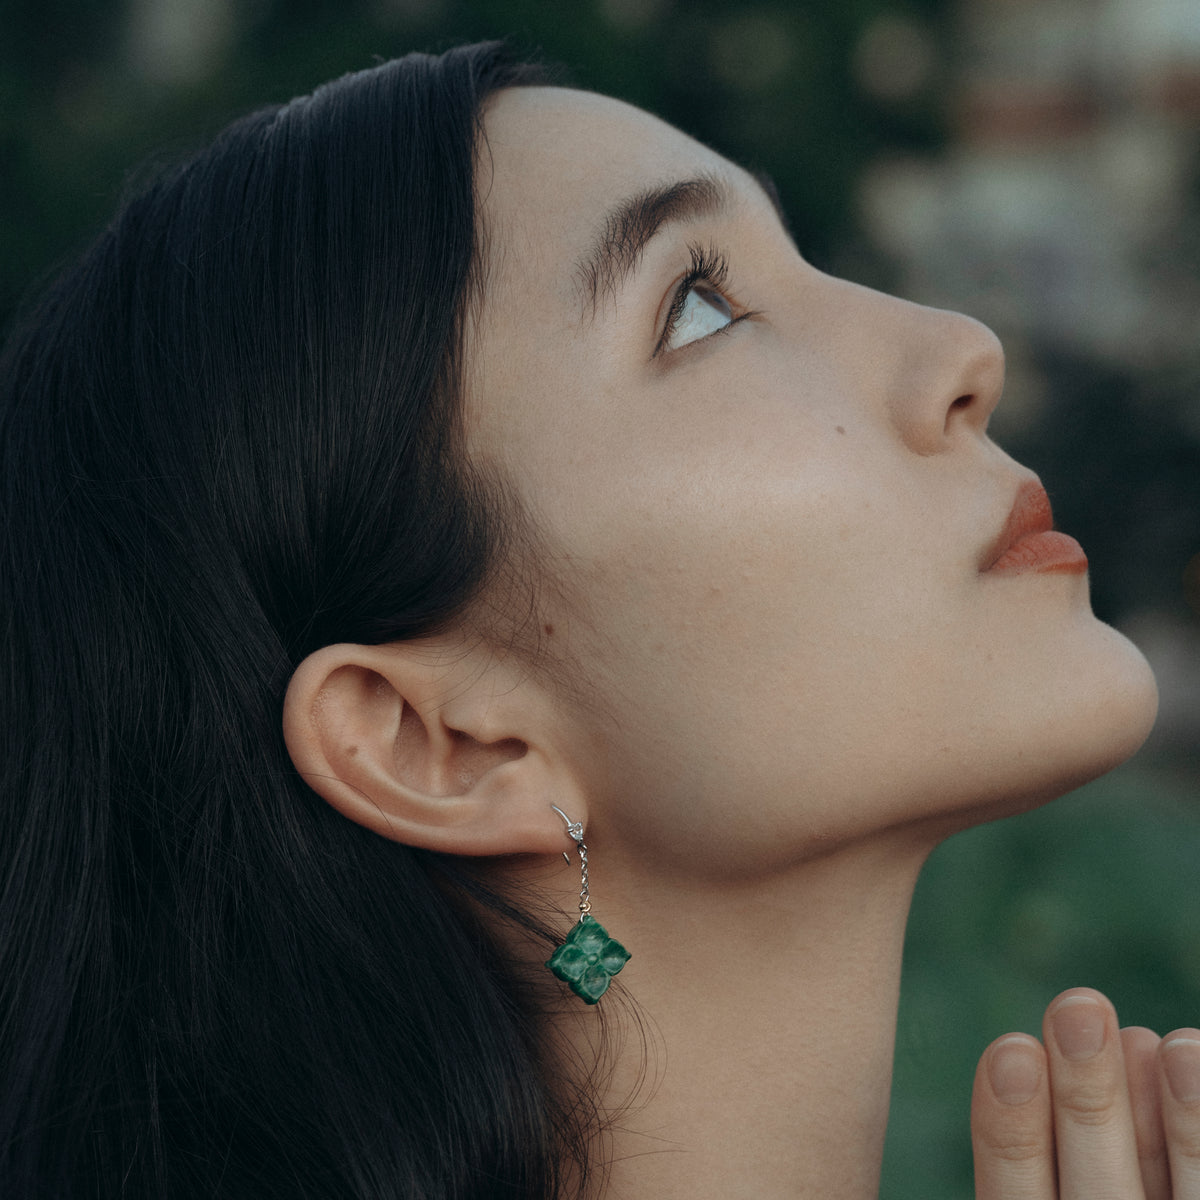 Woman praying wearing beautiful jade earring